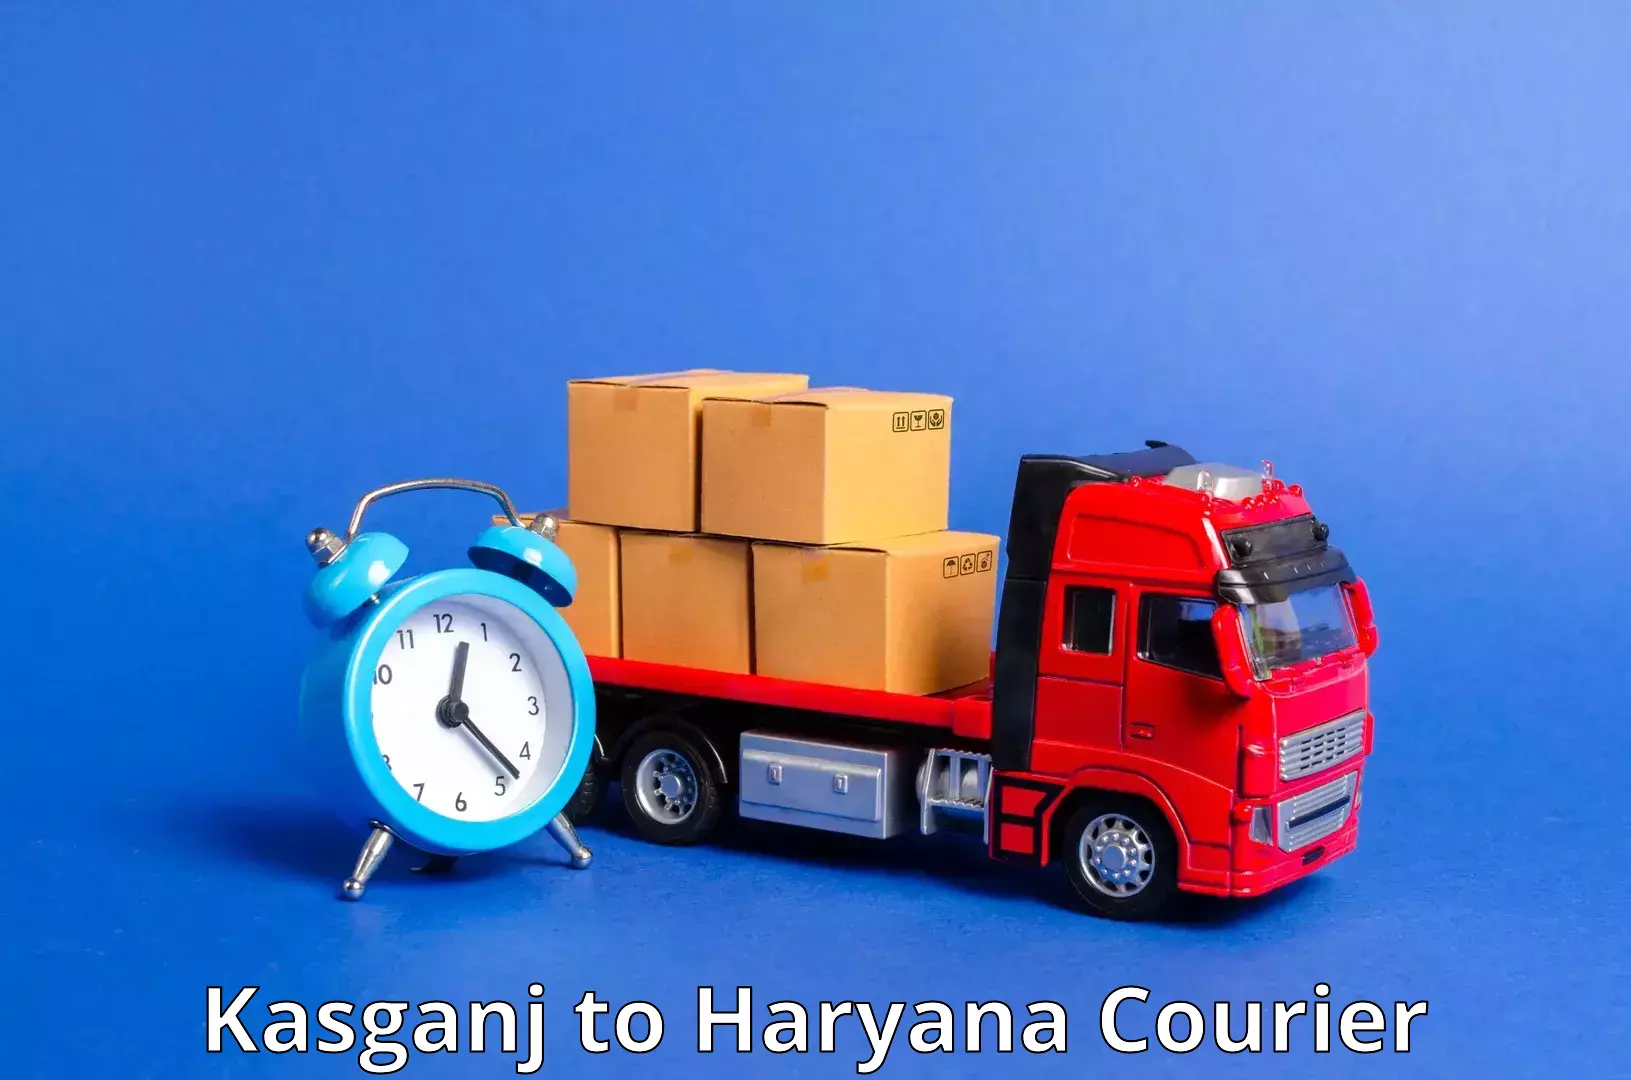 High-speed delivery Kasganj to Dharuhera